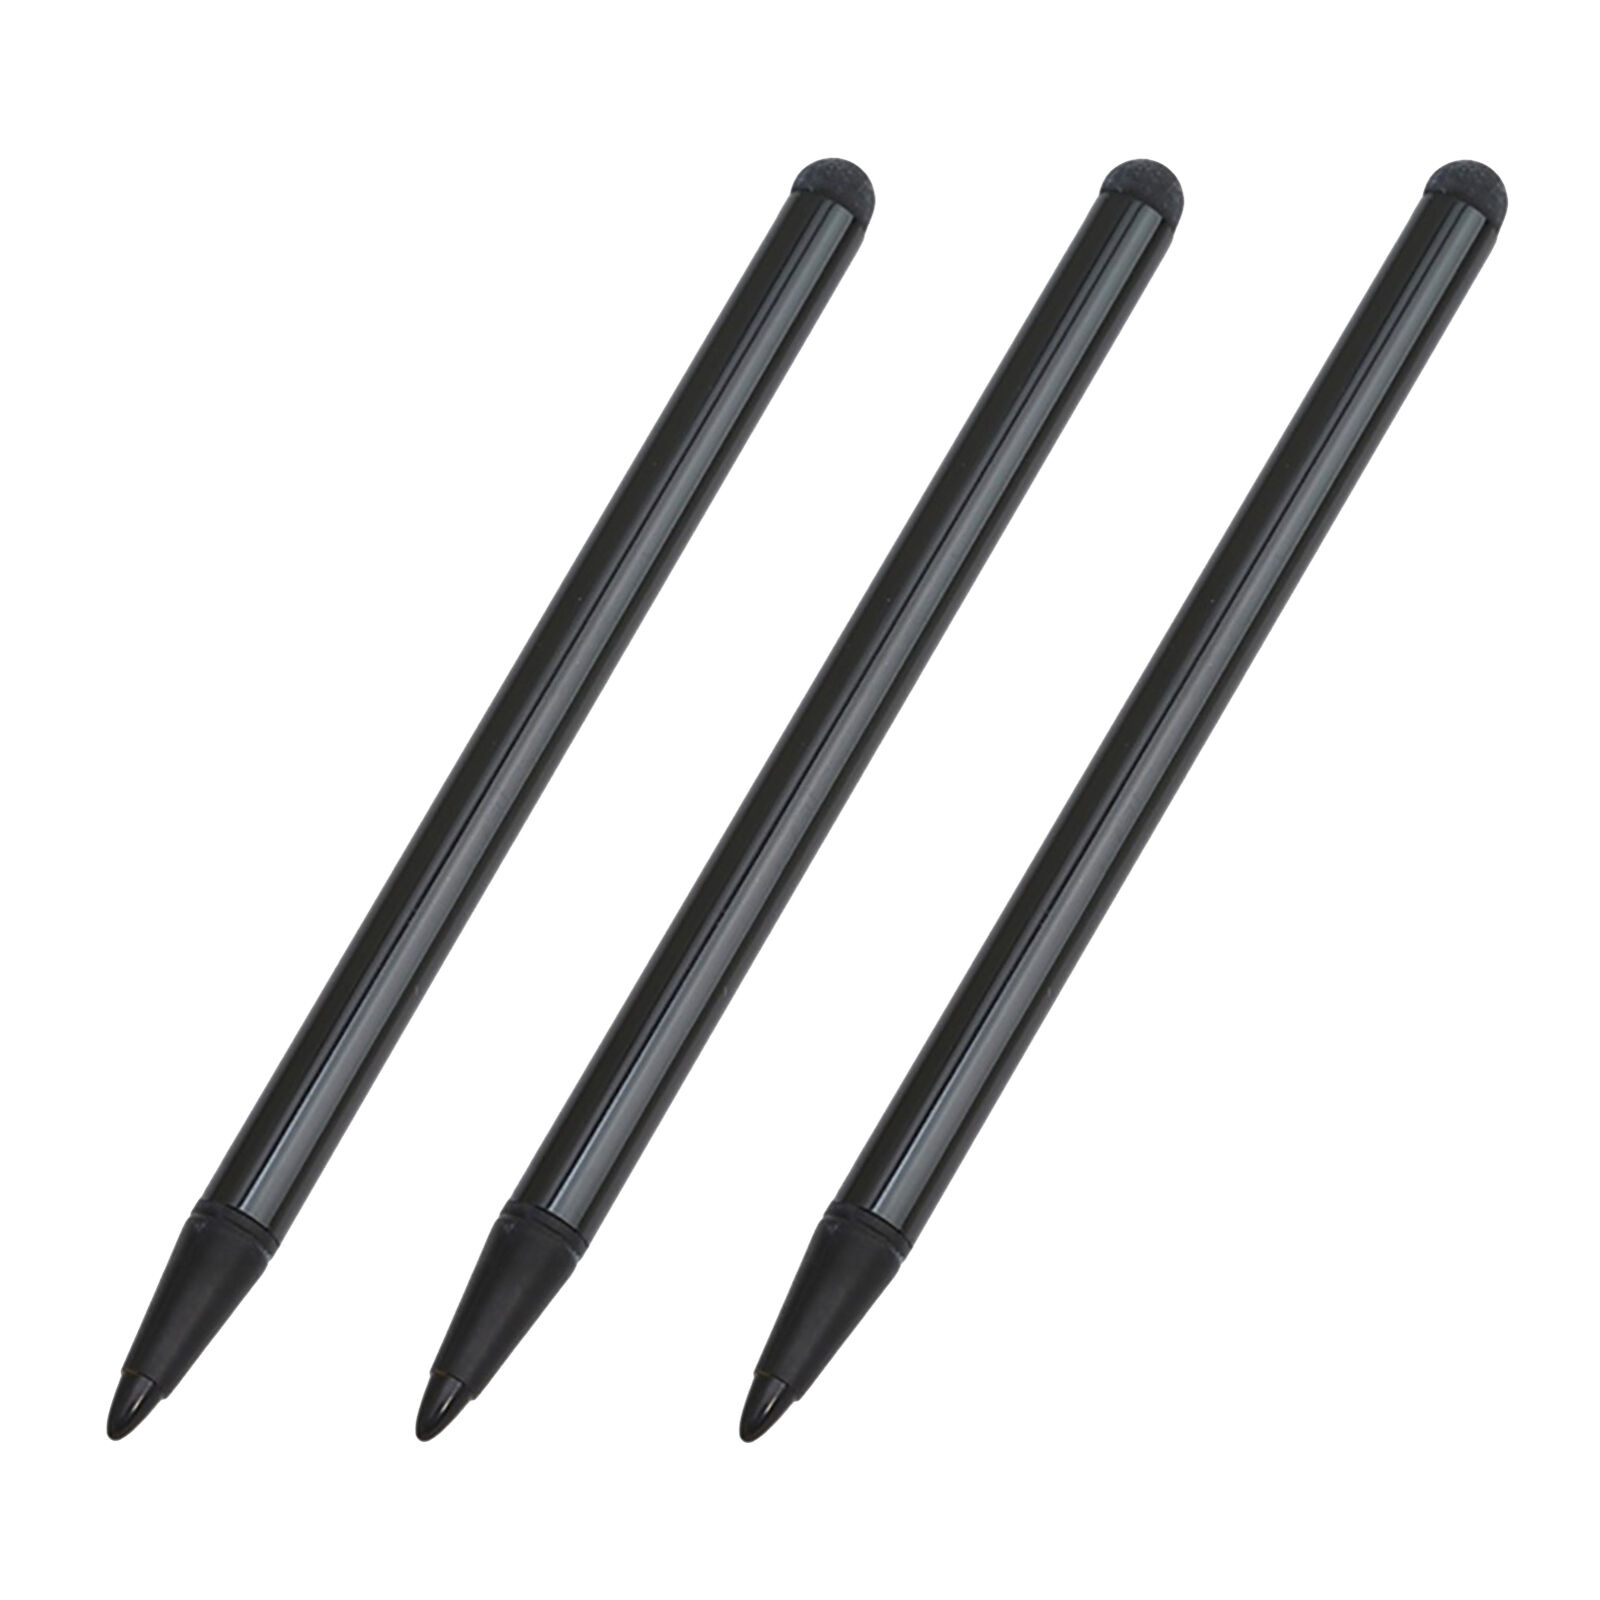 Sensitive Digital Tablet Pen - Touchscreen Capacitive Pen For Drawing & Phone